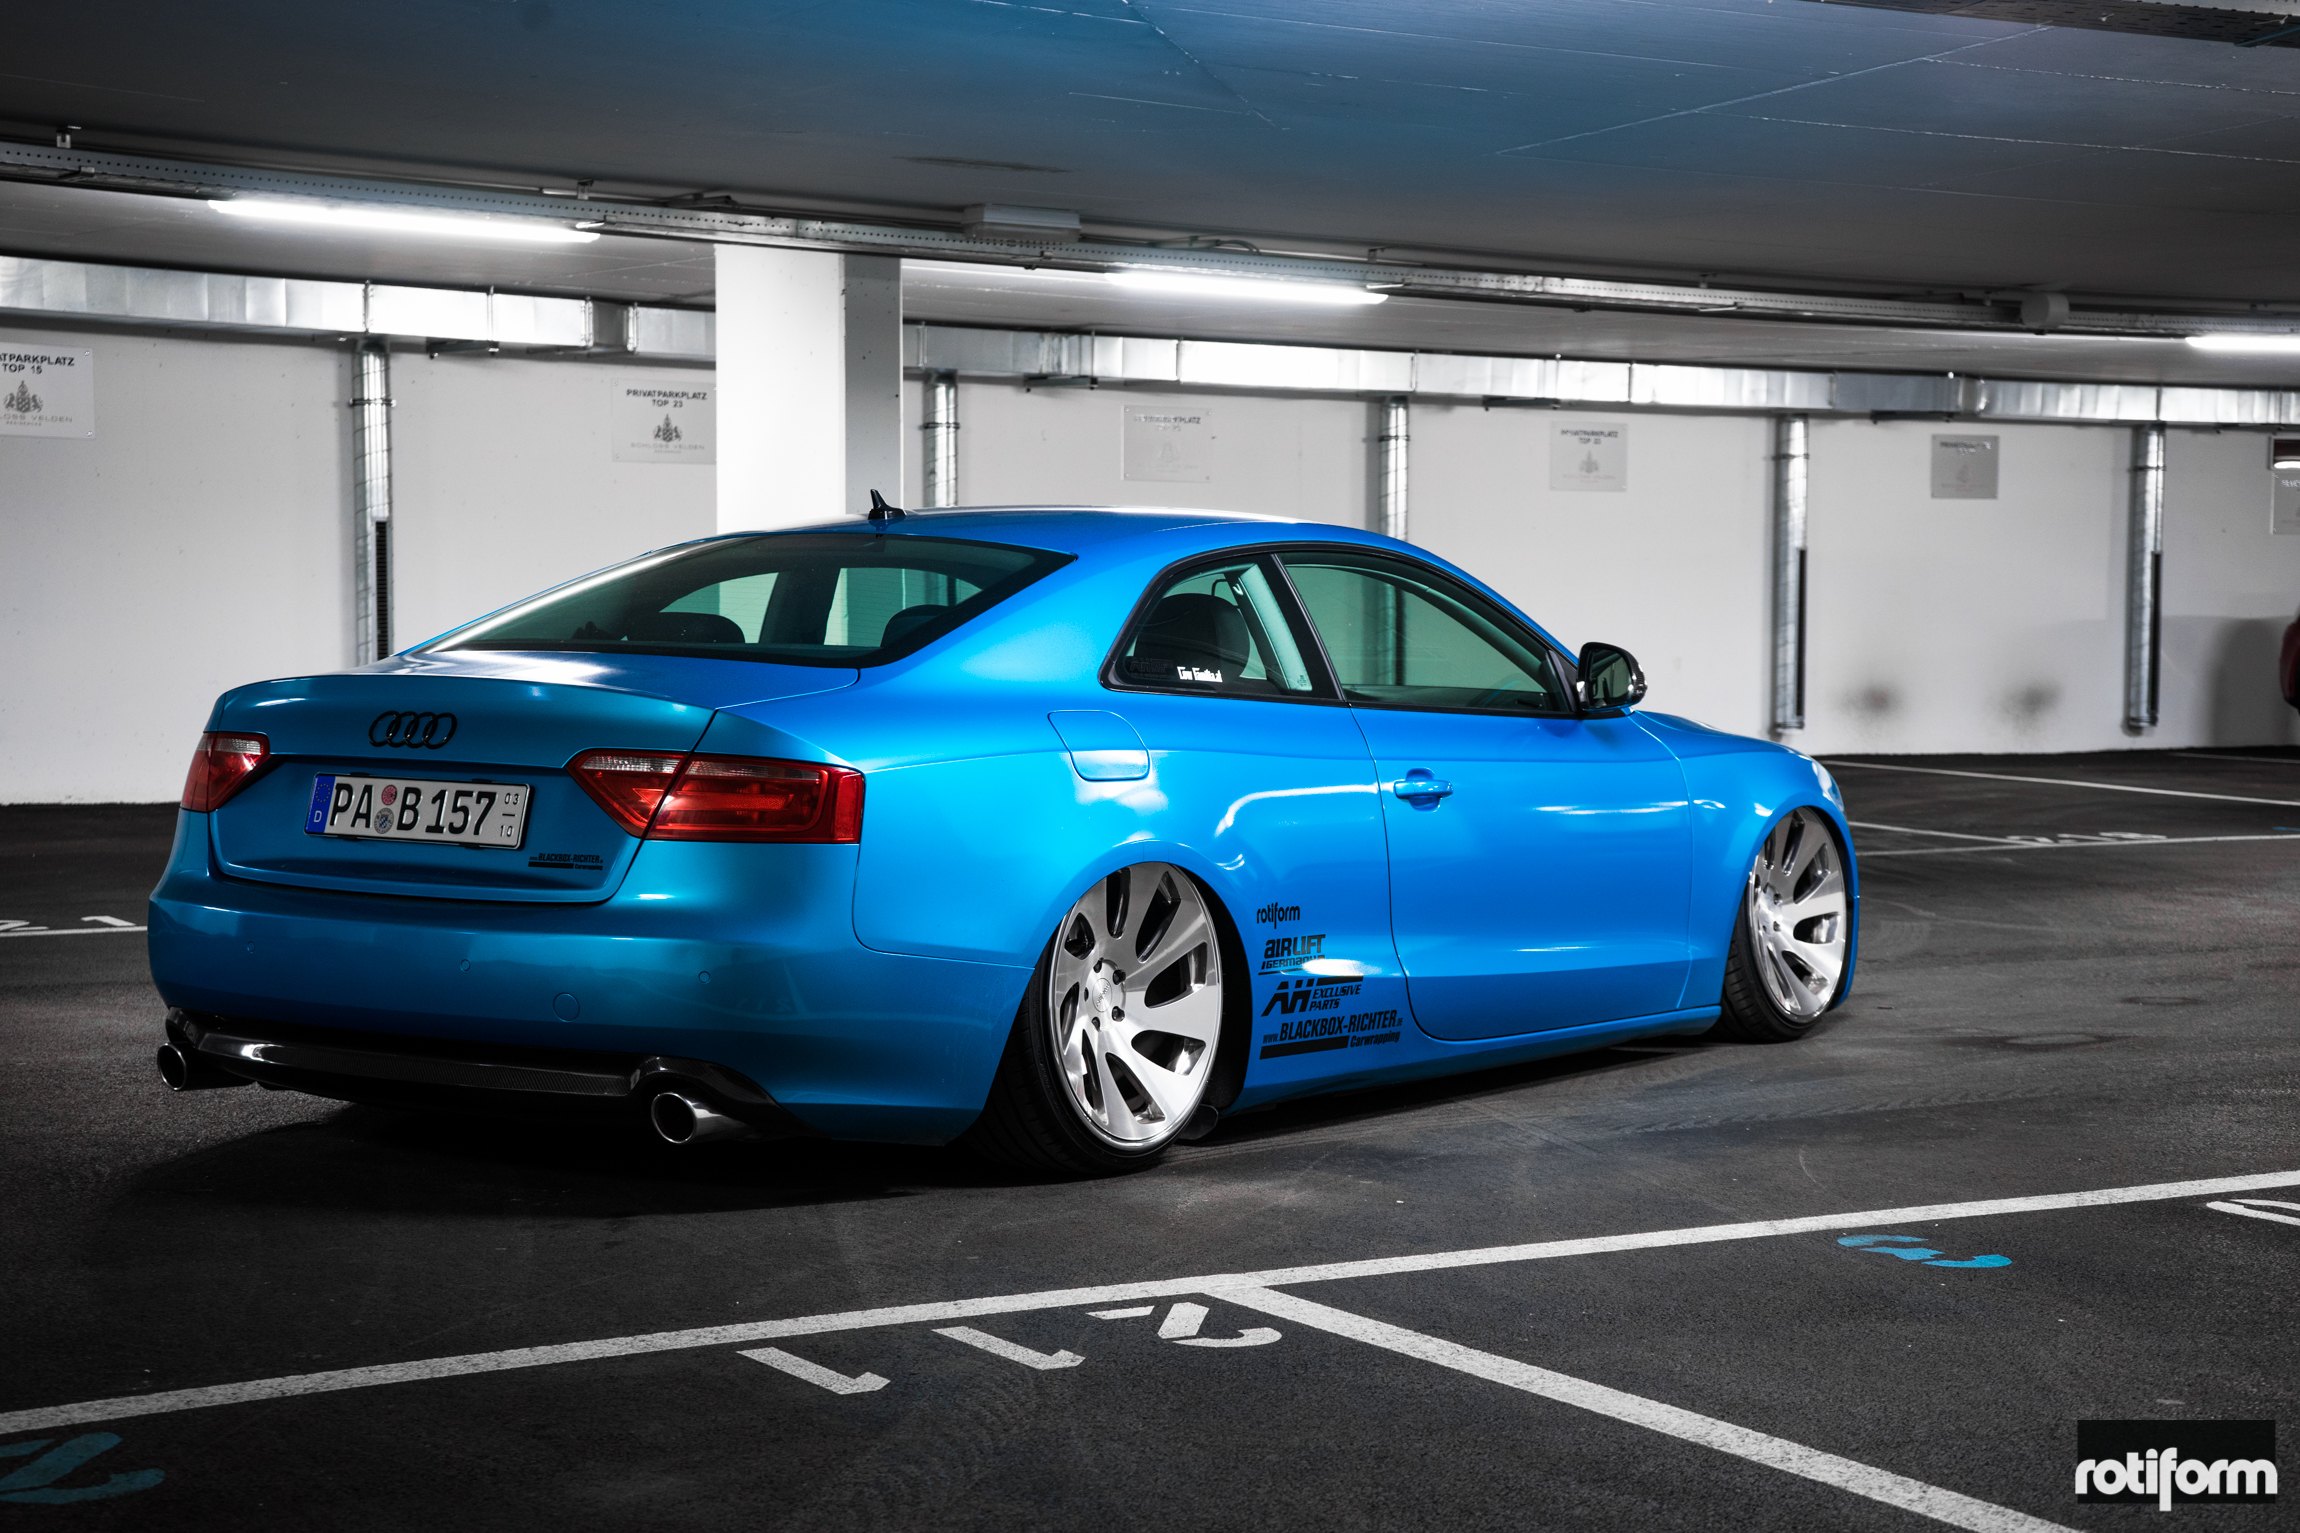 Carbon Fiber Rear Diffuser on Blue Audi A5 - Photo by Rotiform